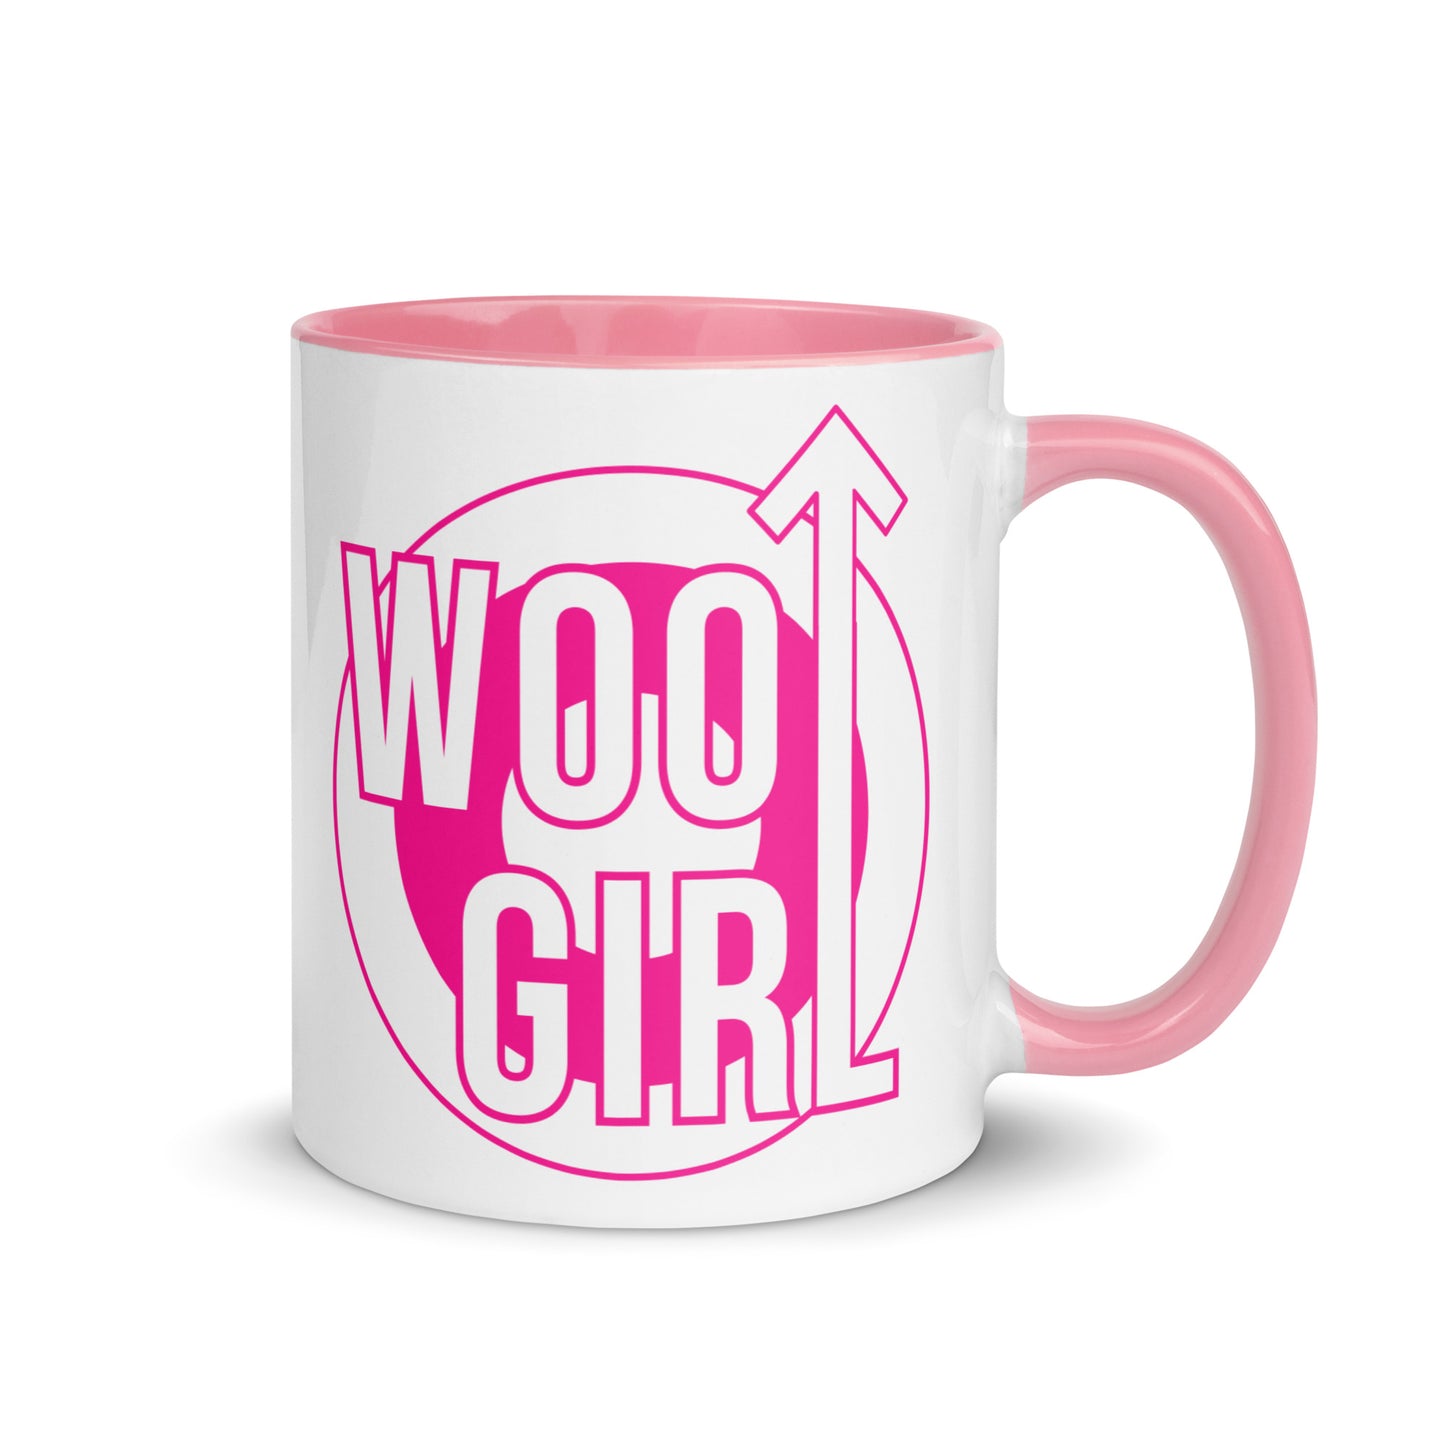 Woo Girl "The Woo" Mug with Color Inside